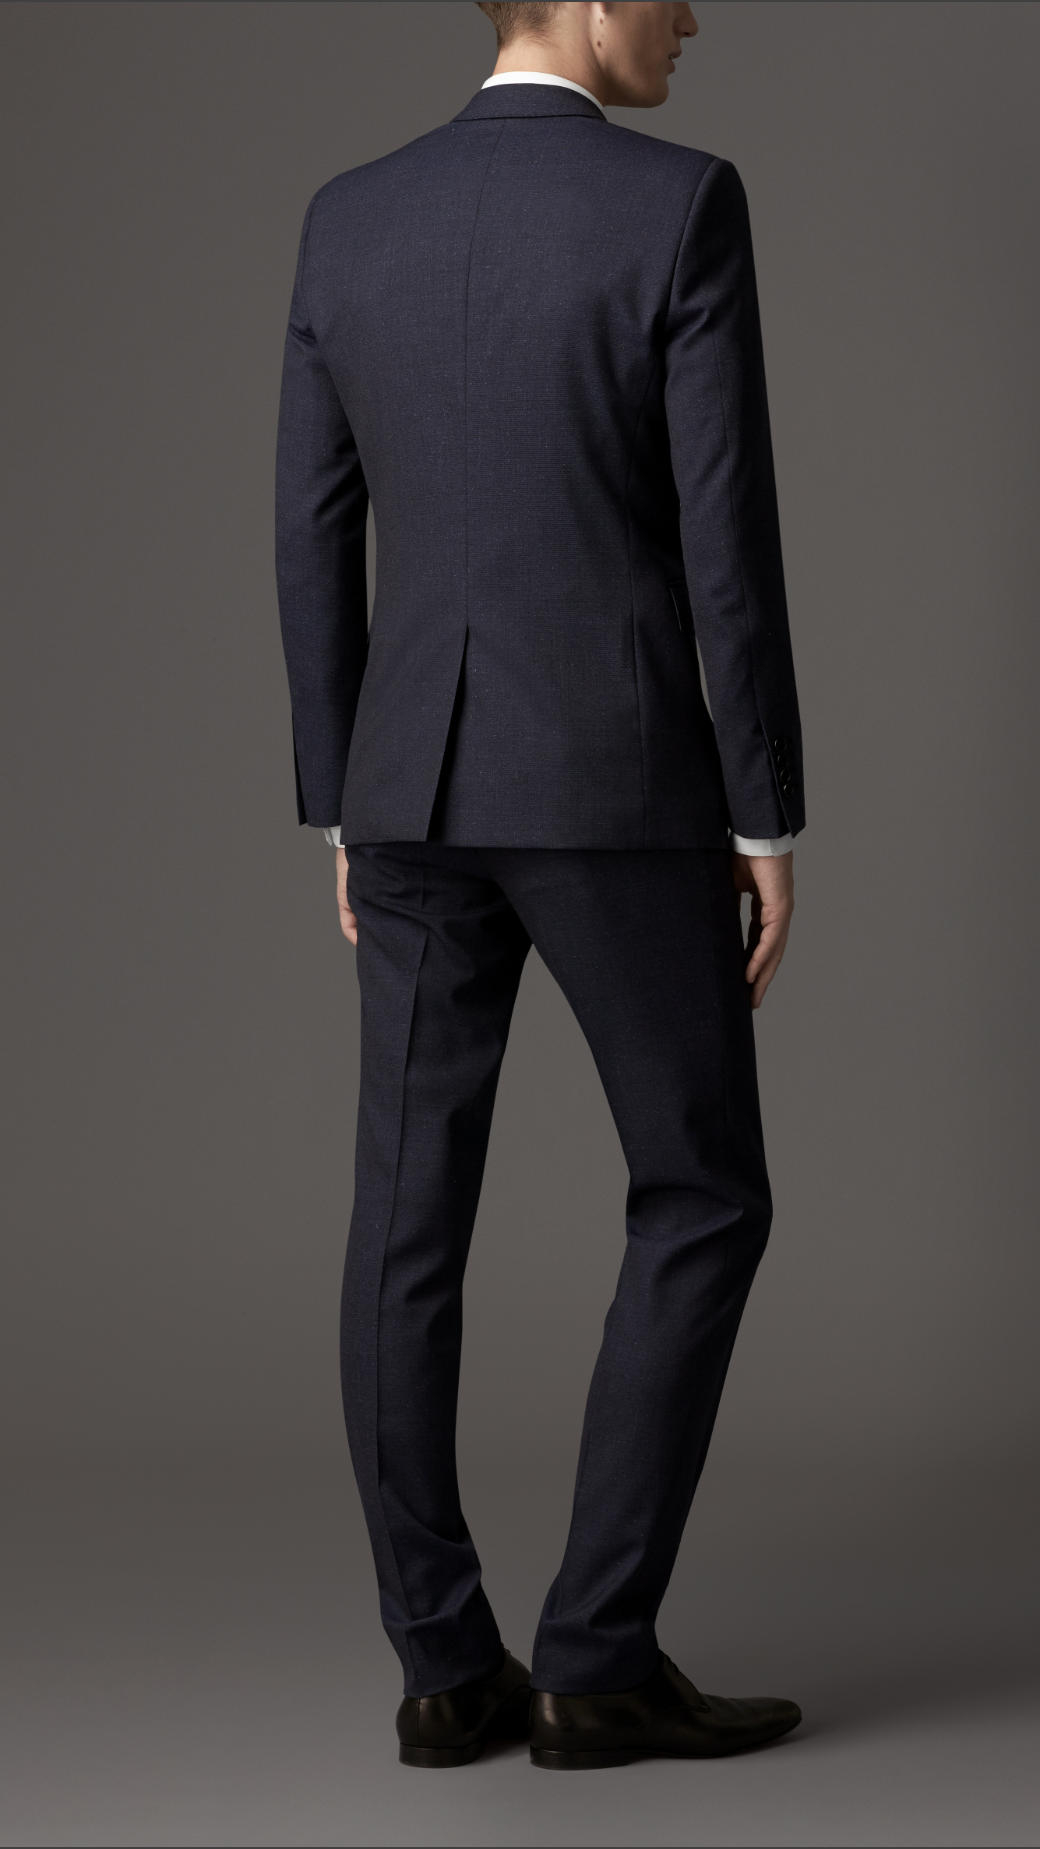 Burberry Slim Fit Wool Silk Suit in Blue for Men - Lyst